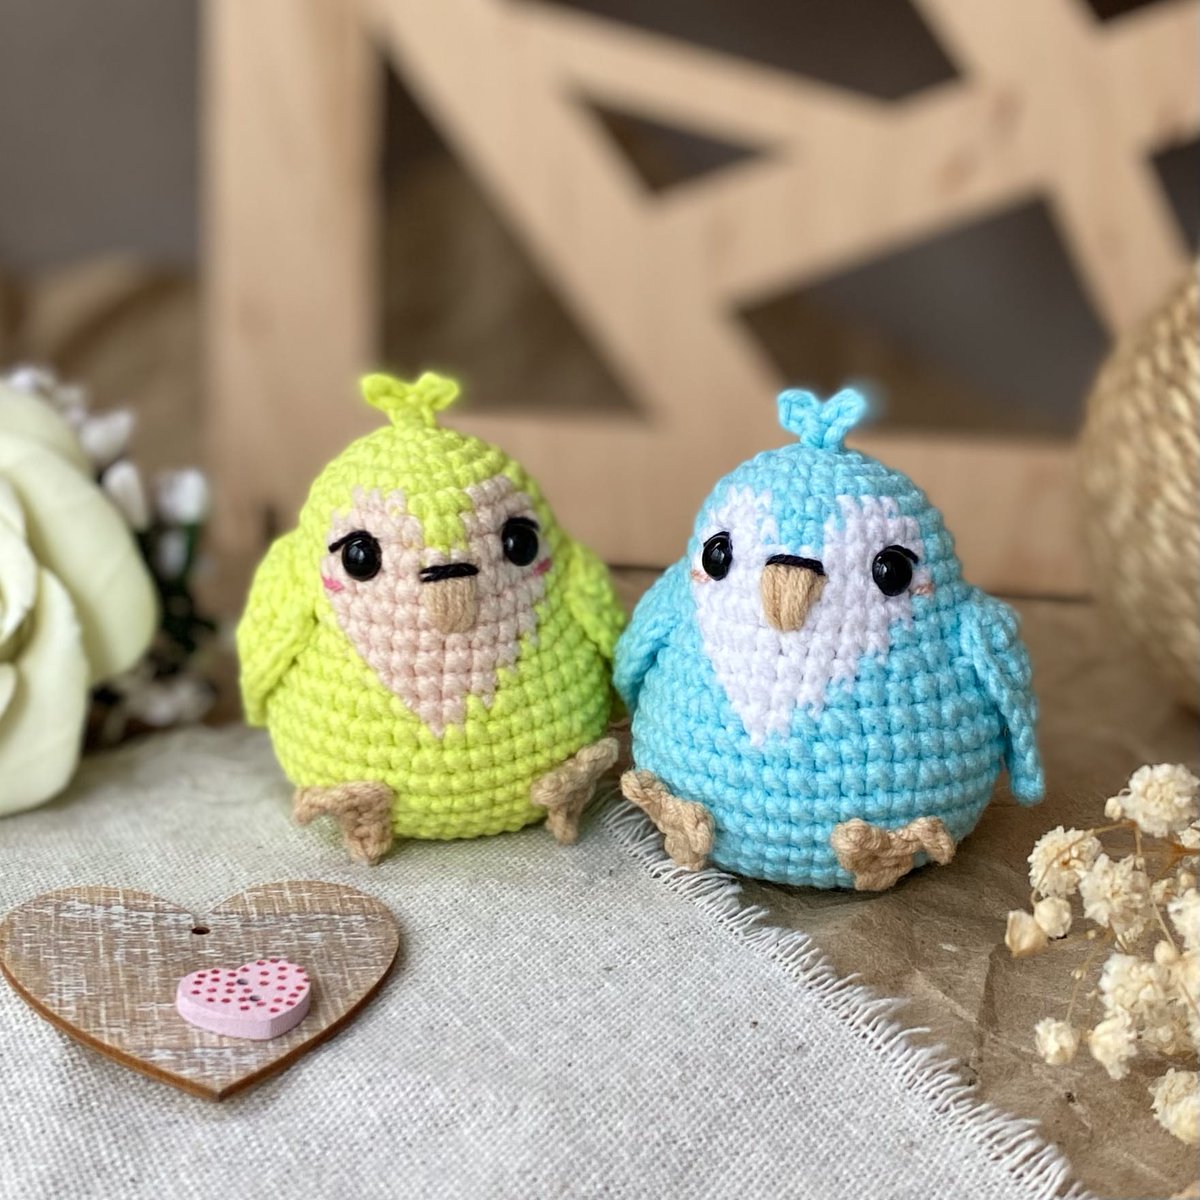 Lovebirds crochet pattern
dailydoll.shop/shop/lovebirds…
#handmade #dailydollshop #crochettoy #crochetdoll #crochet #toys #doll #diygift #christmas #amigurumi #diy #amigurumitoy #knitting #eastergift #birthdaygift #knittingtoys #knittingdolls #valentinesday #xmas #plushtoys #giftideas